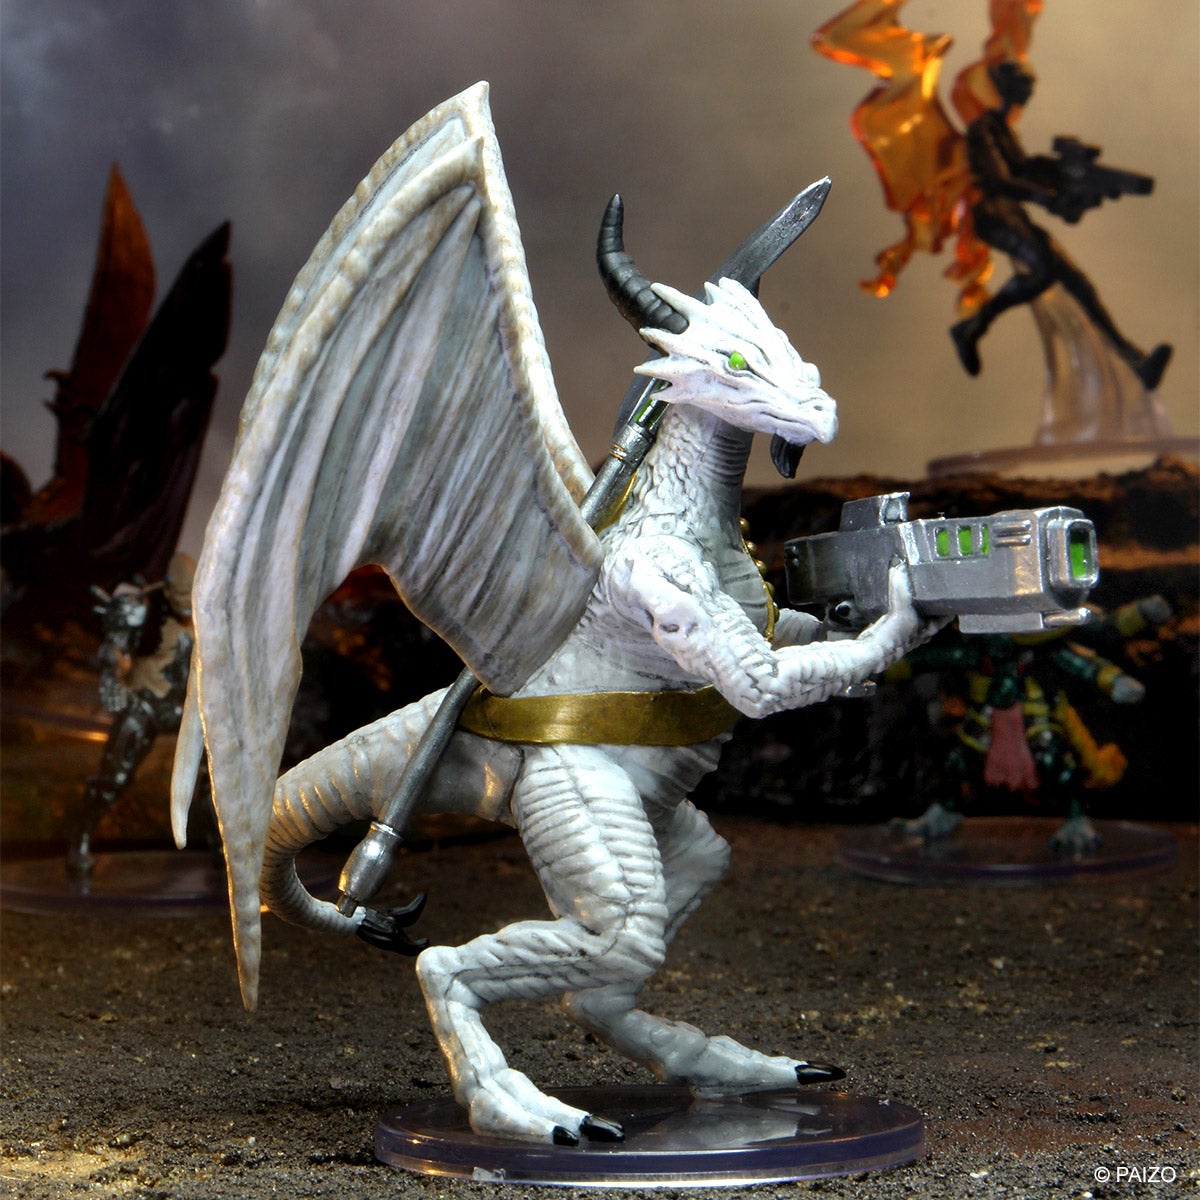 A battle scene featuring the dragonkin mini figure